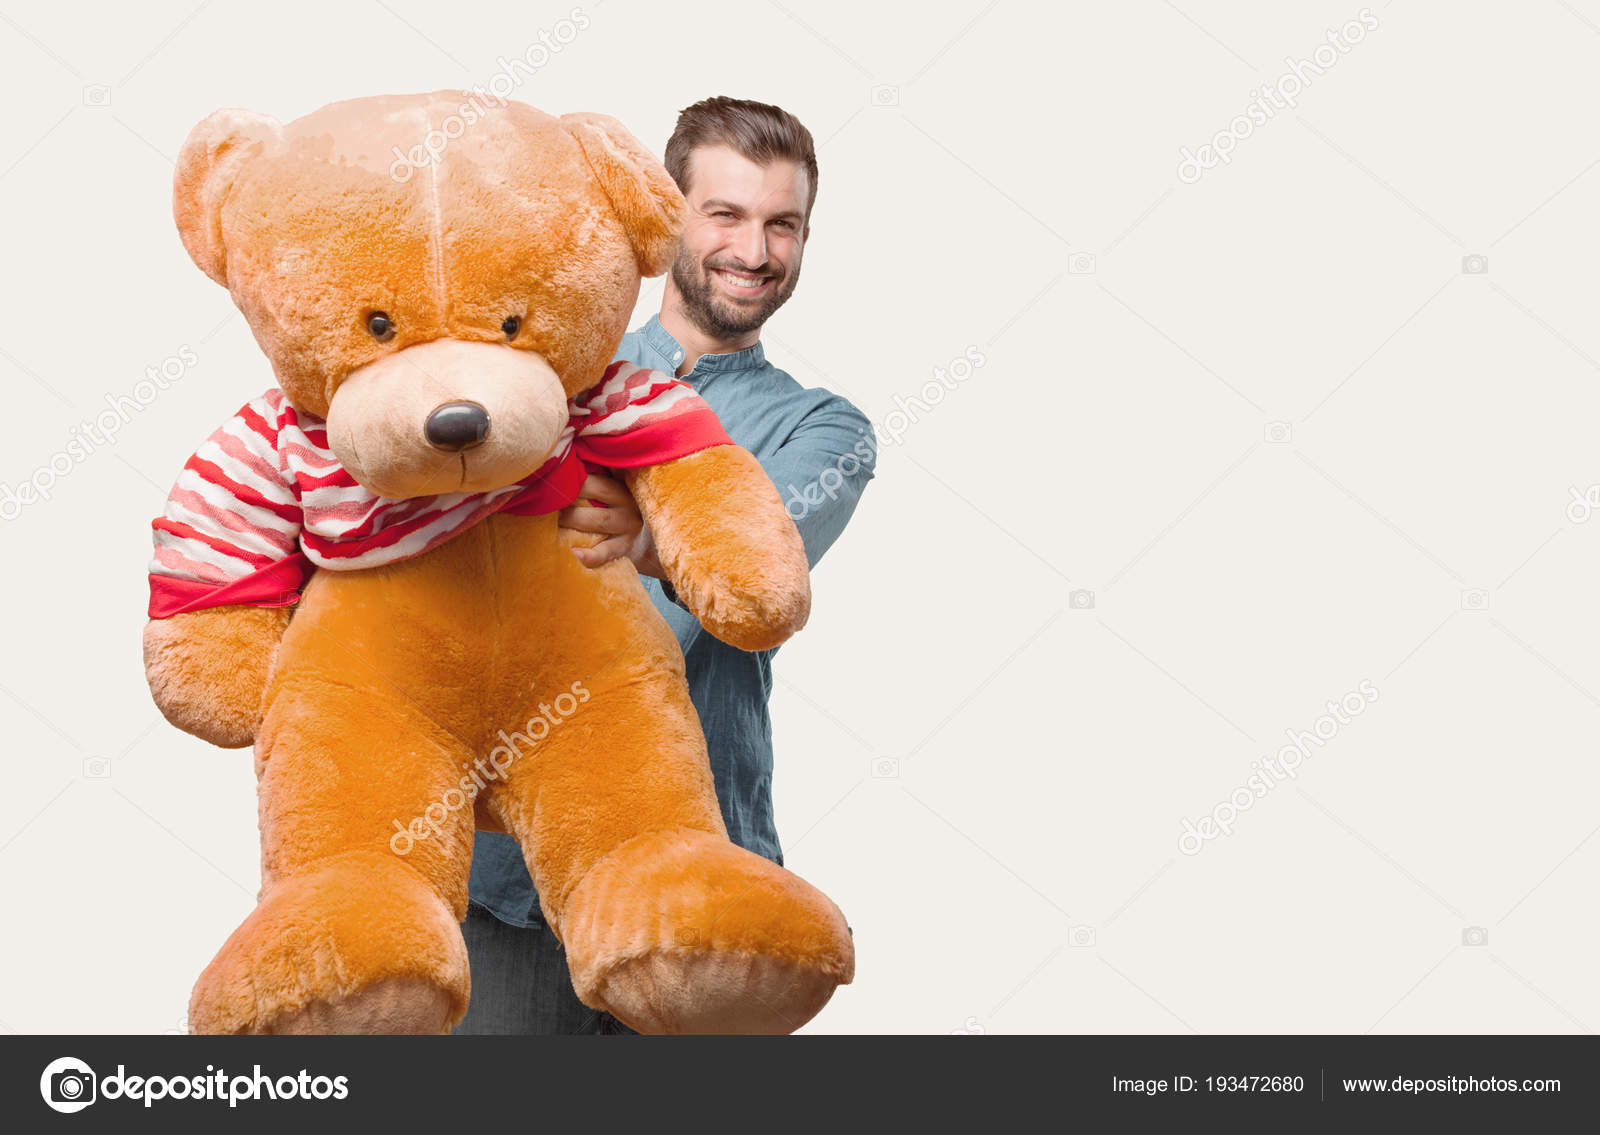 man teddy bear